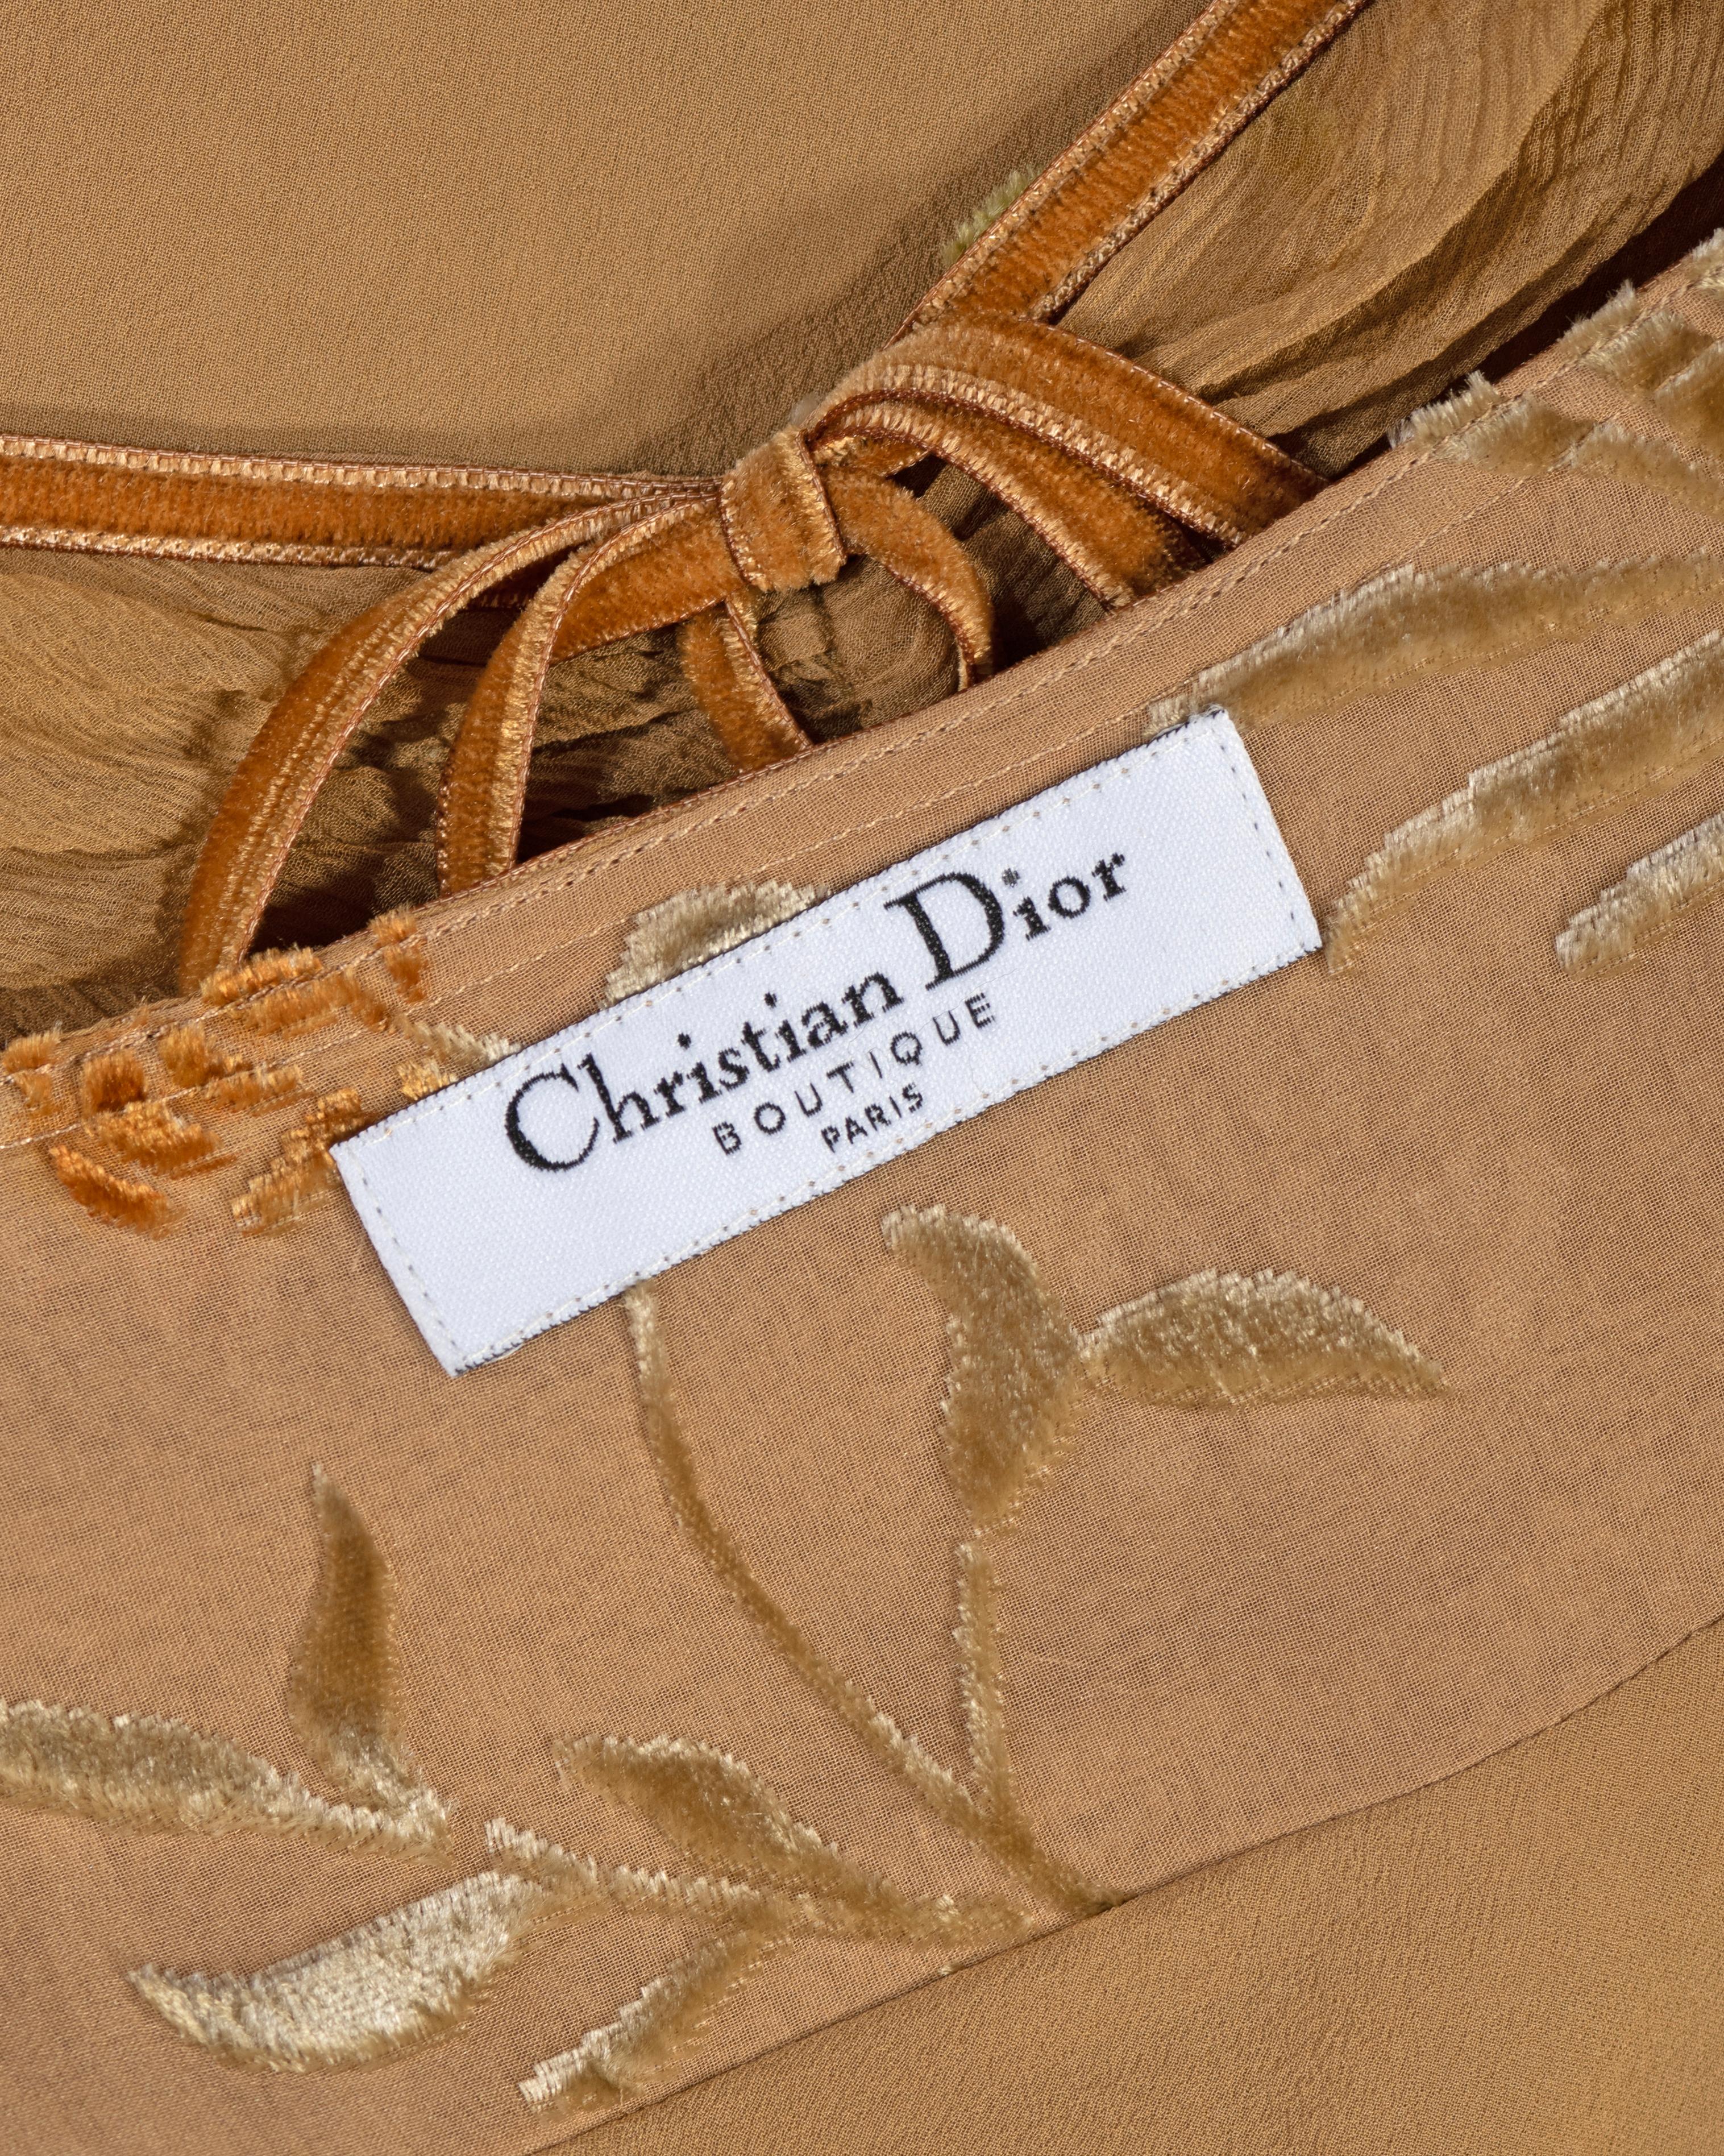  Christian Dior by John Galliano for Christian Dior for John Galliano for Christian Dior for Christian Dior for John Galliano for Christian Dior for Christian Dior, ss 2006 en vente 10